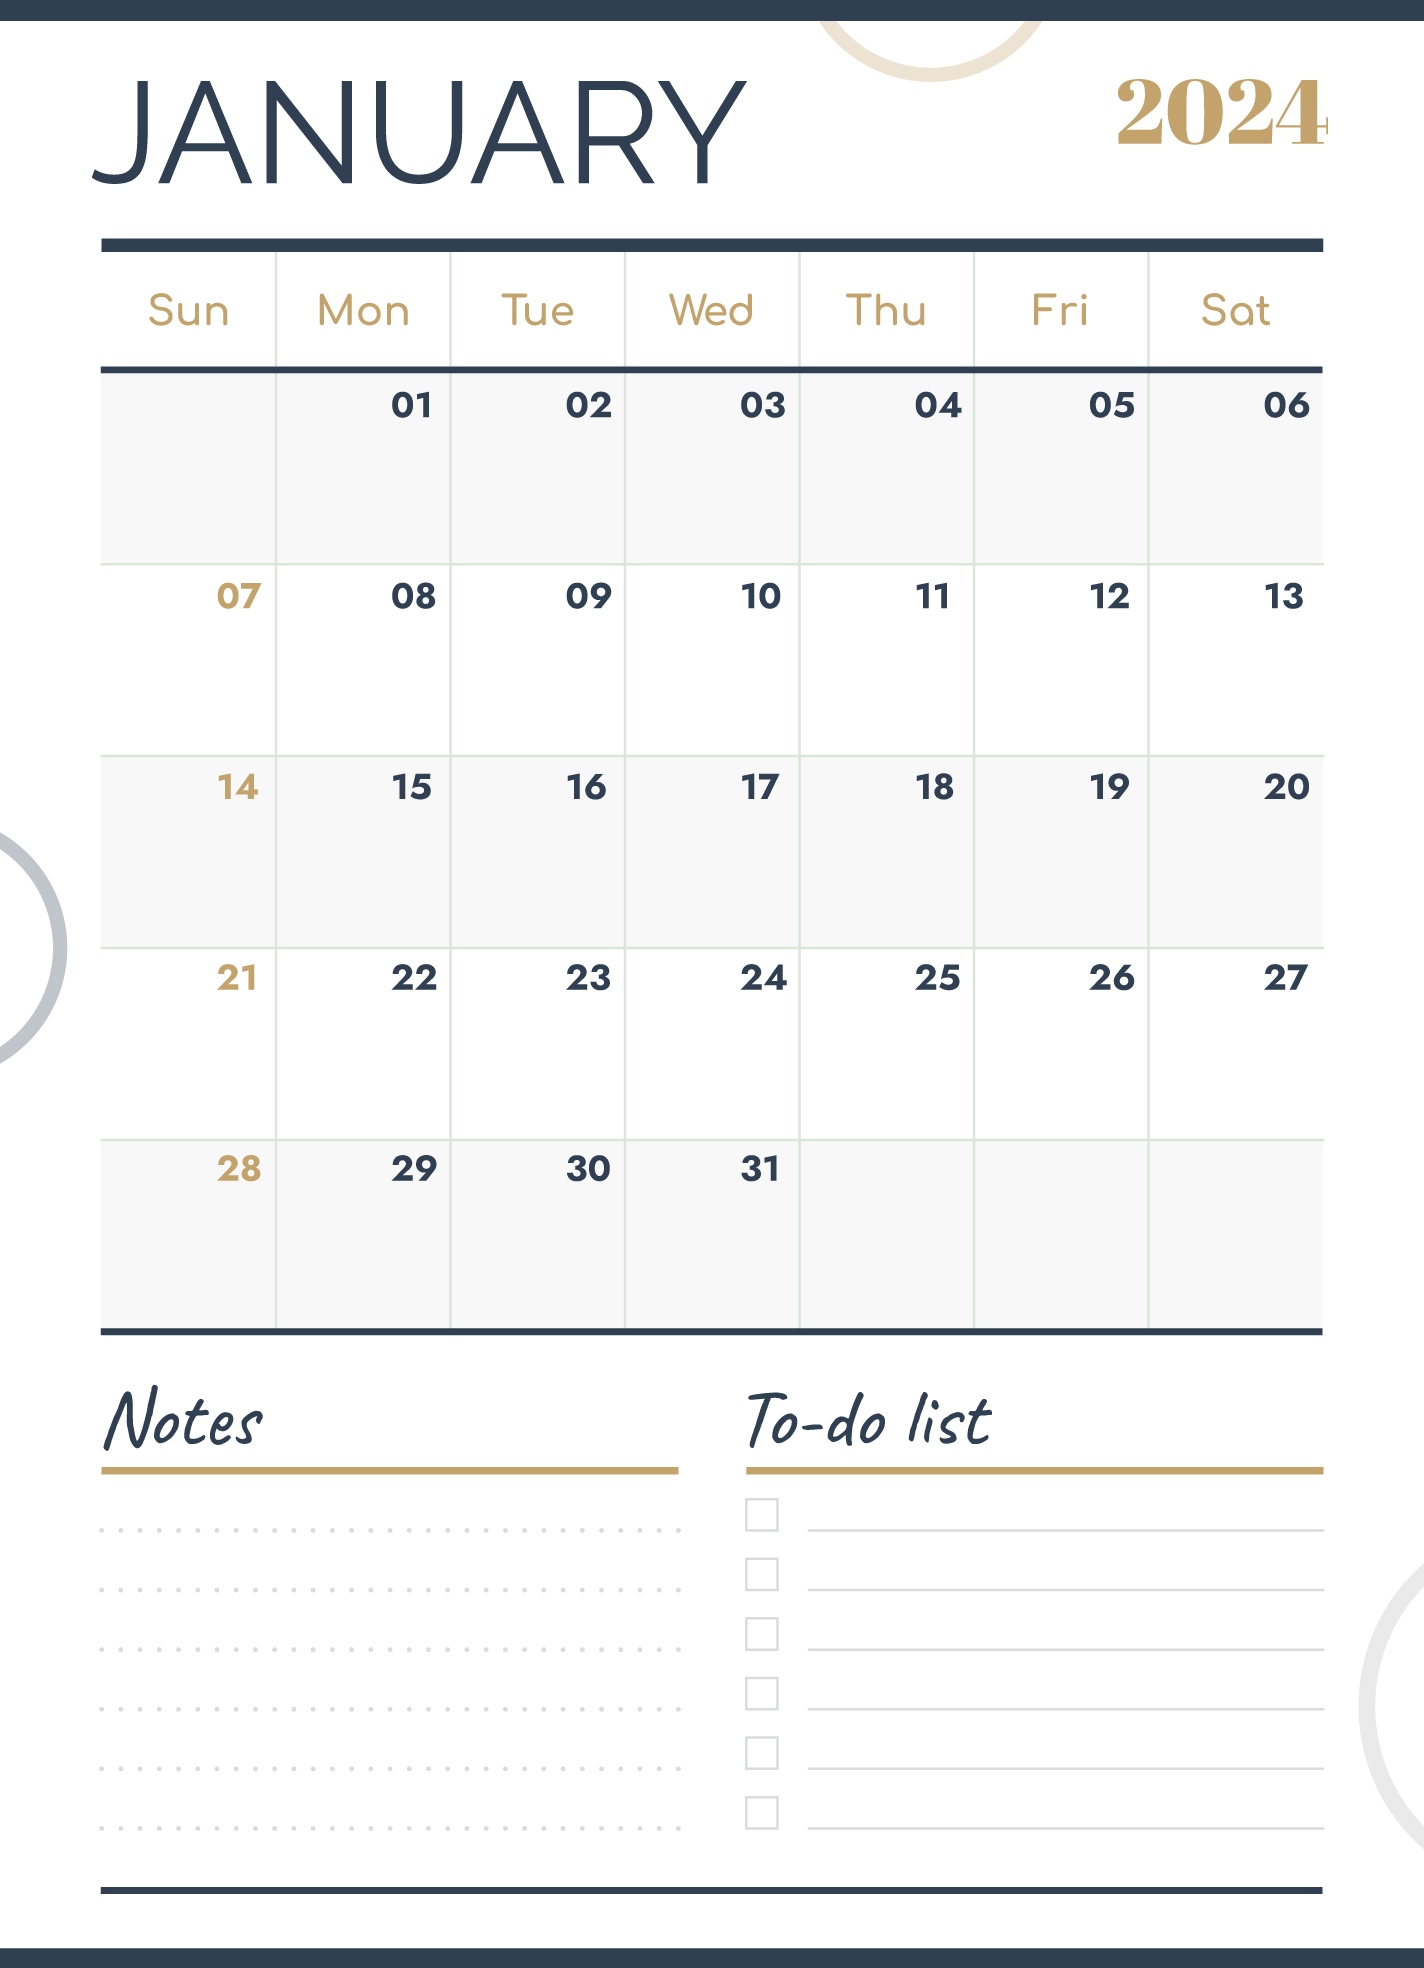 January 2024 Calendar Free Google Docs Template - Gdoc.io in Free Printable Calendar 2024 Editable